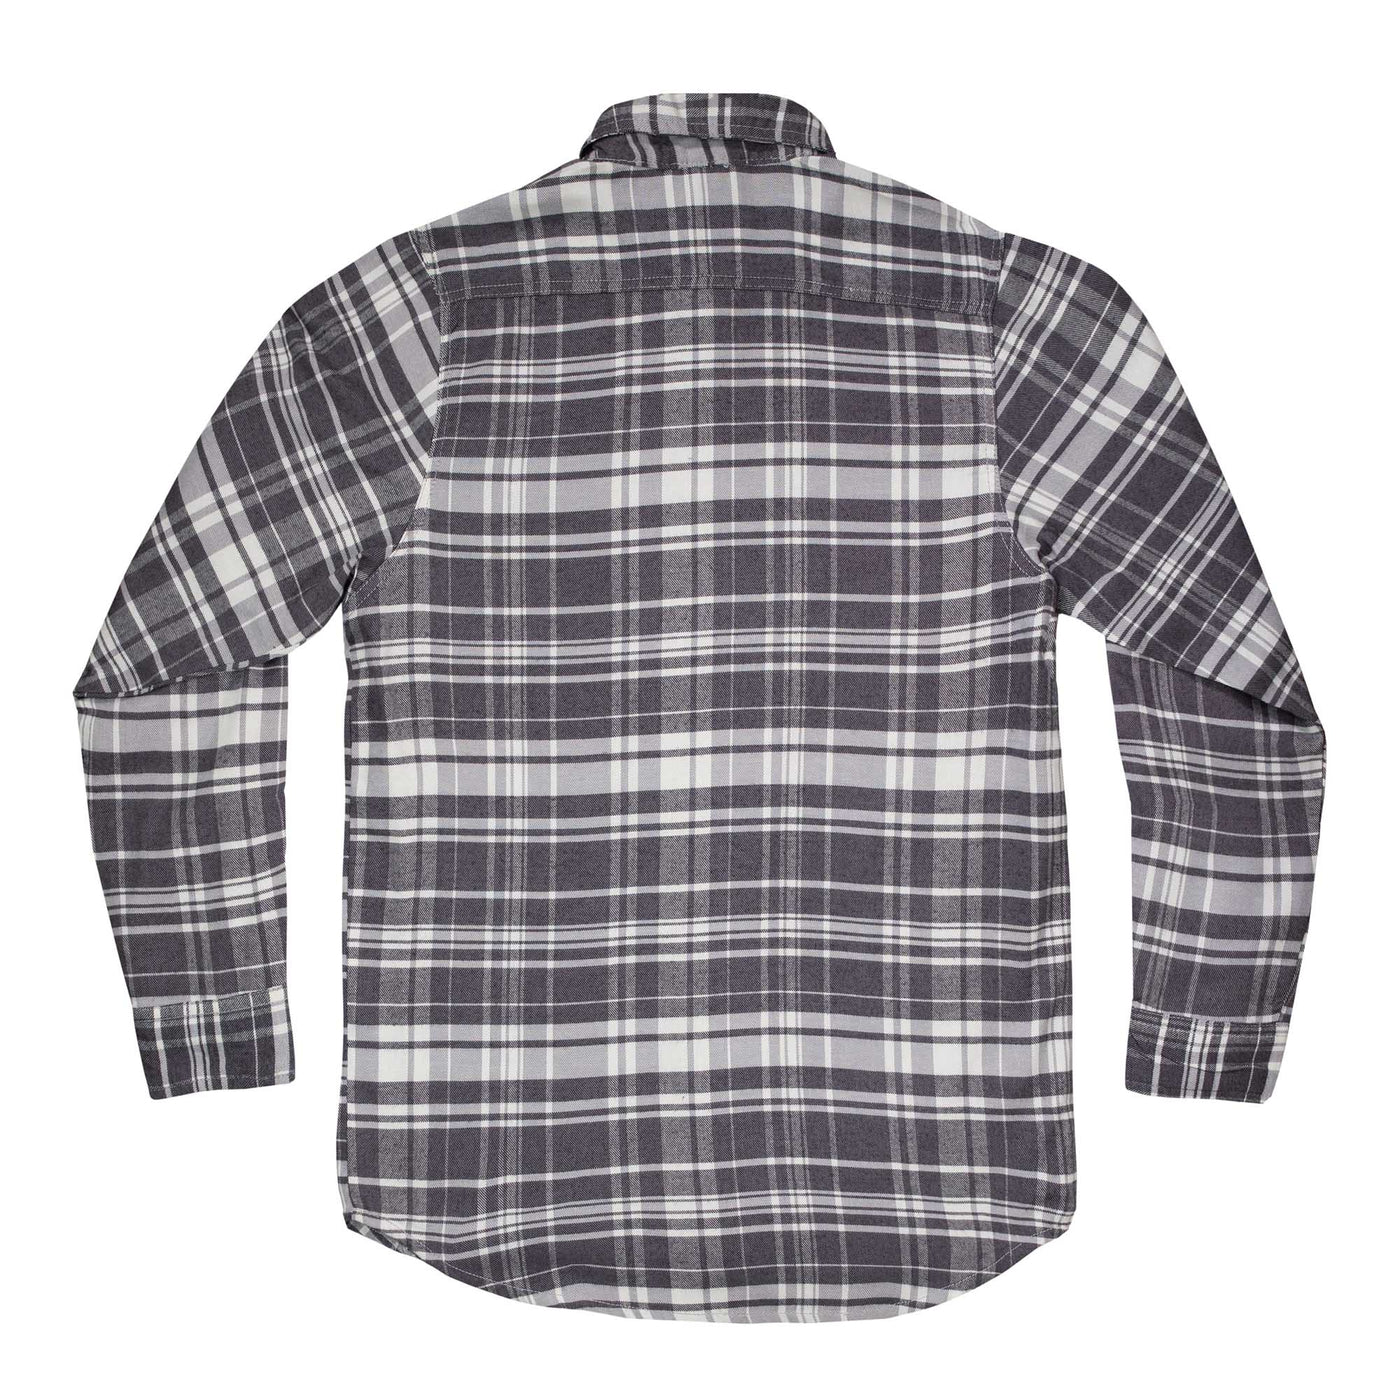 Mossy Oak Men's Plaid Flannel Shirt